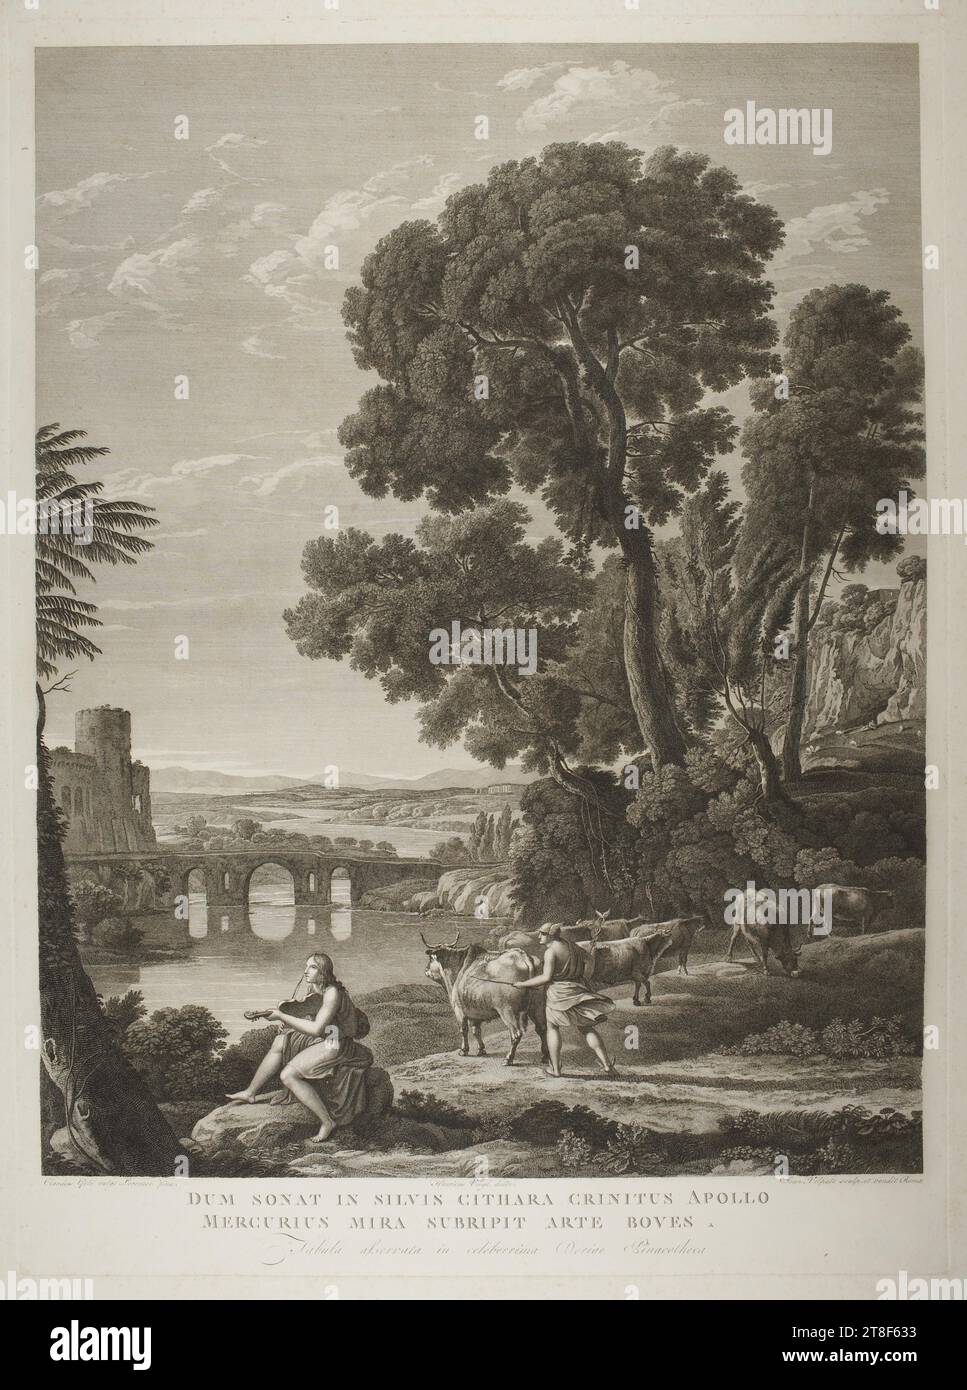 Landscape with Apollo and Mercury Stealing the Flock of Admetus, Giovanni Volpato, 1740-1803, No later than 1803, Graphic Art, Copper Engraving, Paper, Color, Printer's ink, Copper engraving, Printet, Height (plate size) 625 mm, Height (paper size) 660 mm, Width (plate size) 465 mm, Width (paper size) 500 mm, Claudio Gelé vulgo Lorense pinx., Hendric Voogd delin, Joan Volpato sculp et vendit Romæ, DUM SONAT IN SILVIS CITHARA CRINITUS APOLLO, MERCURIUS MIRA SUBRIPIT ARTE BOVES., Tabula asservanata celeberrima Doriae Pinacotheca, Graphic Design Stock Photo